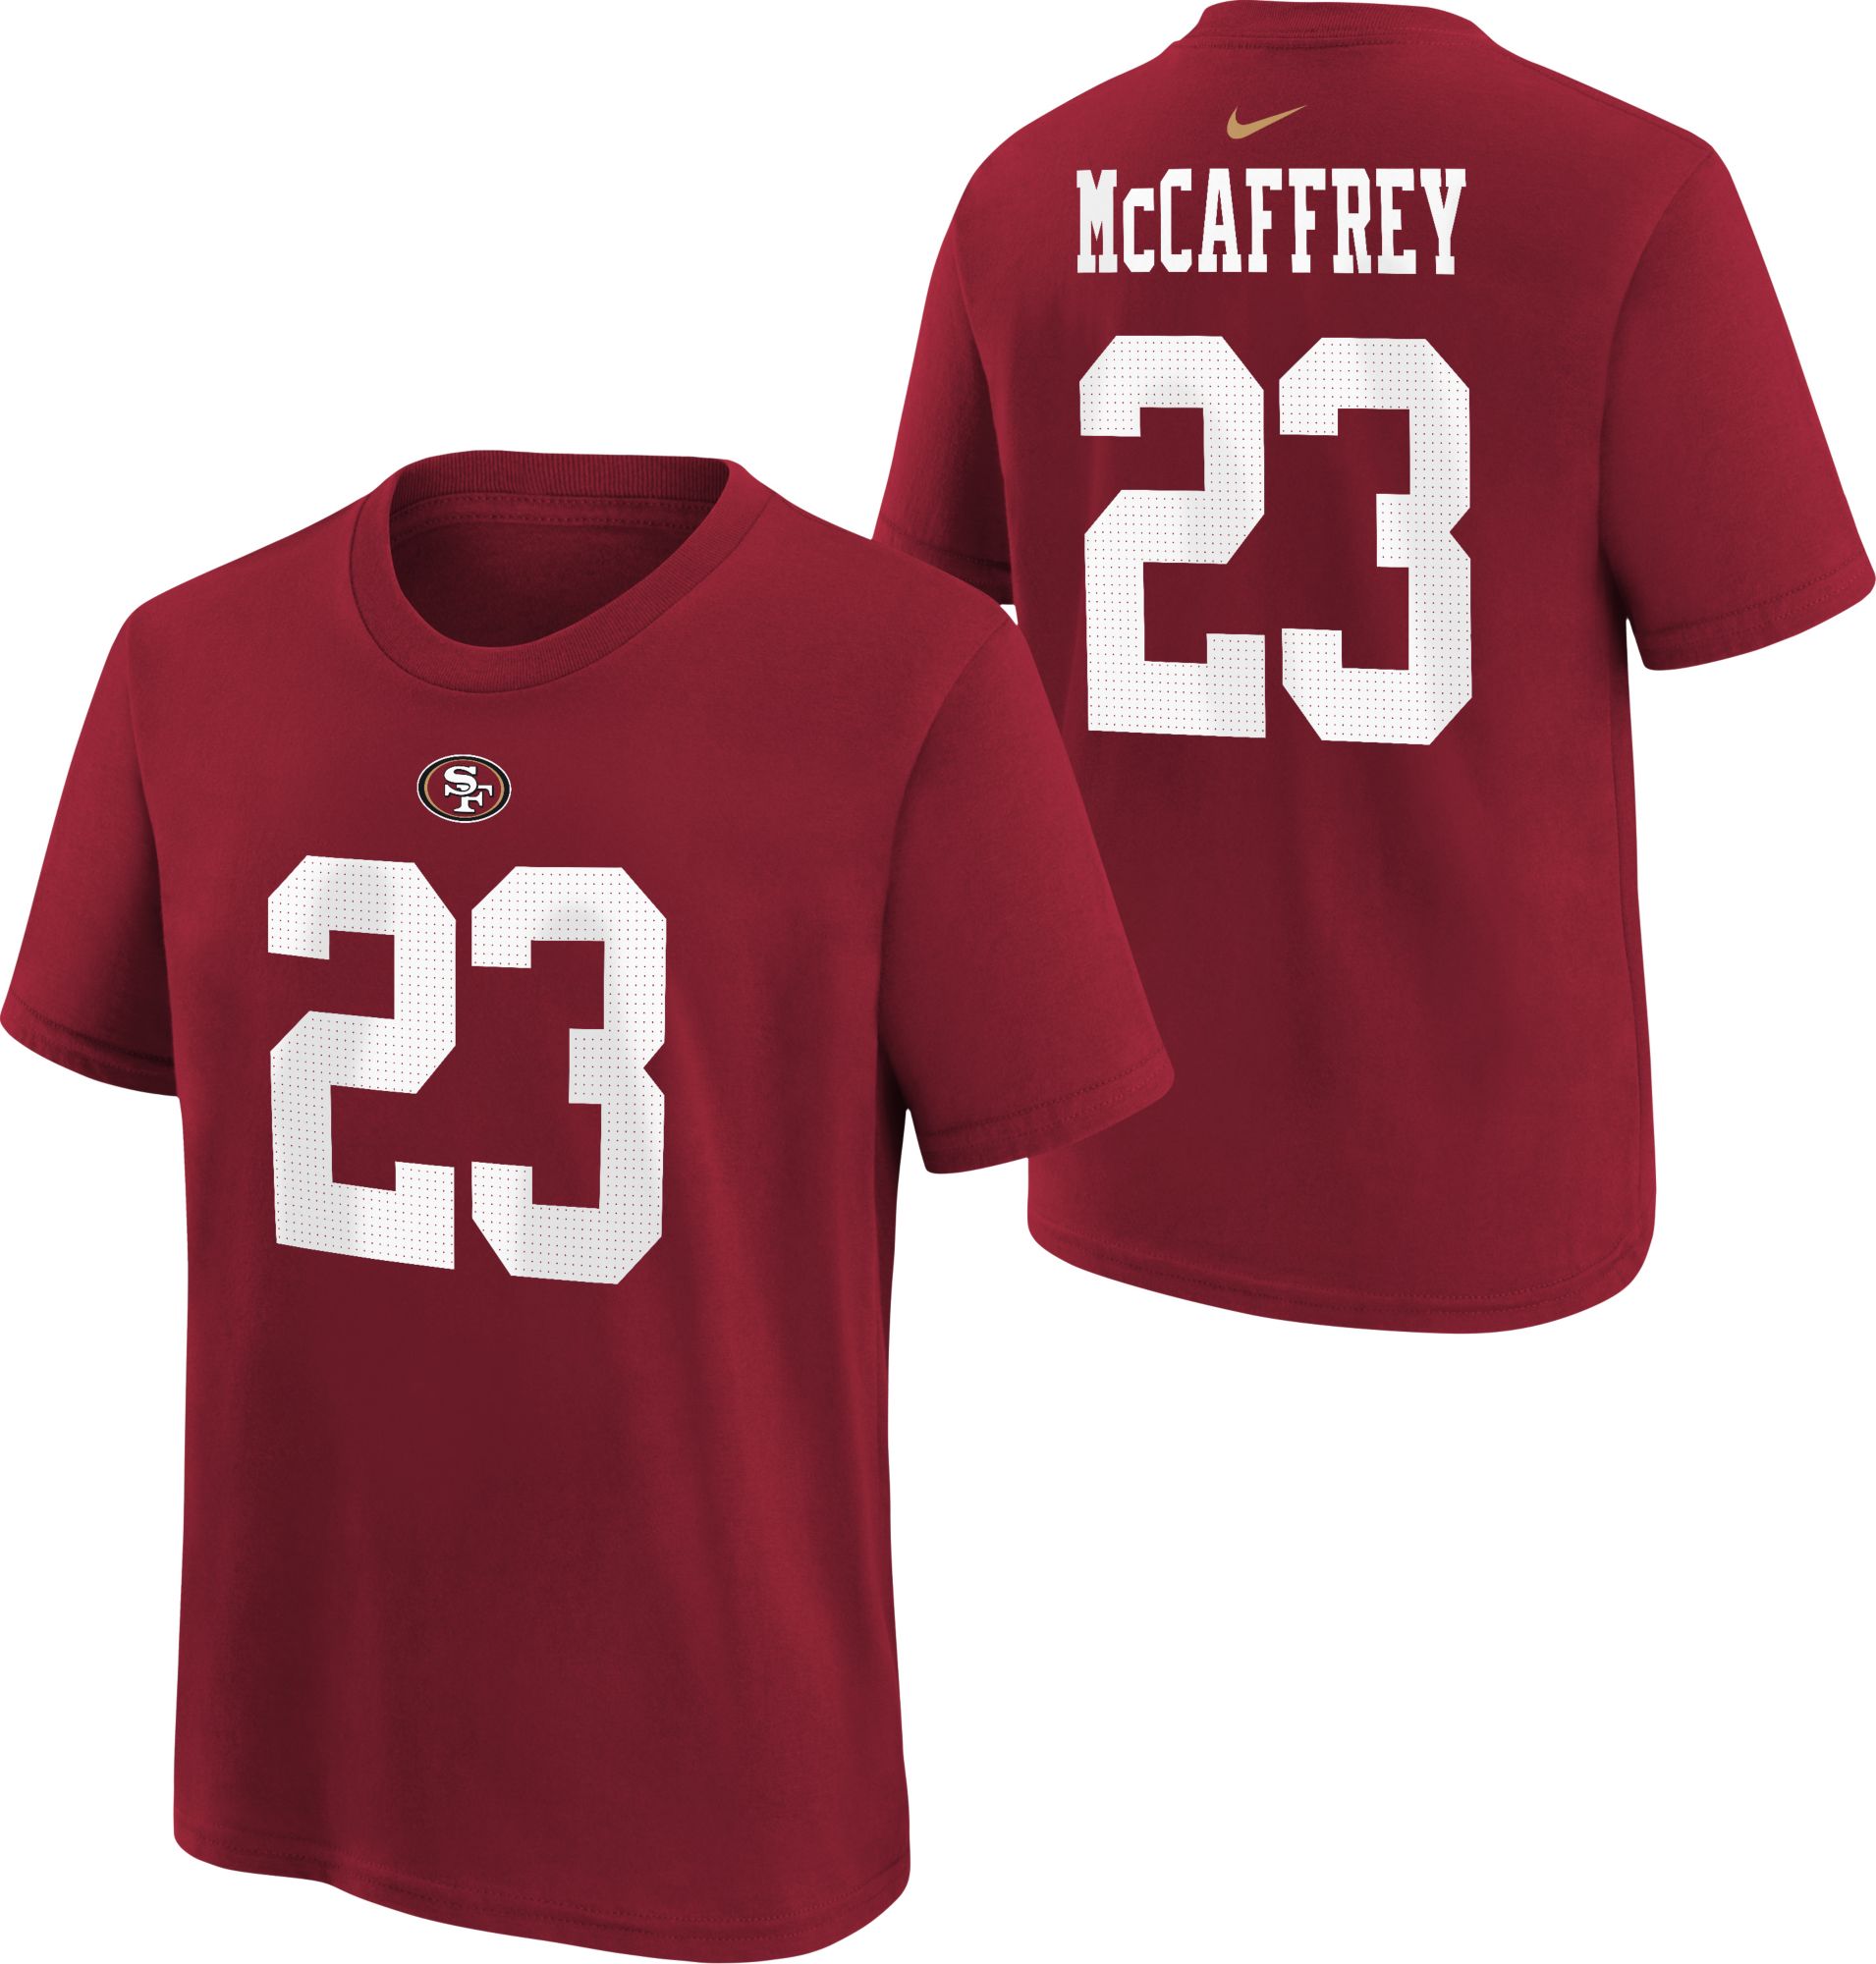 mccaffrey youth jersey 49ers